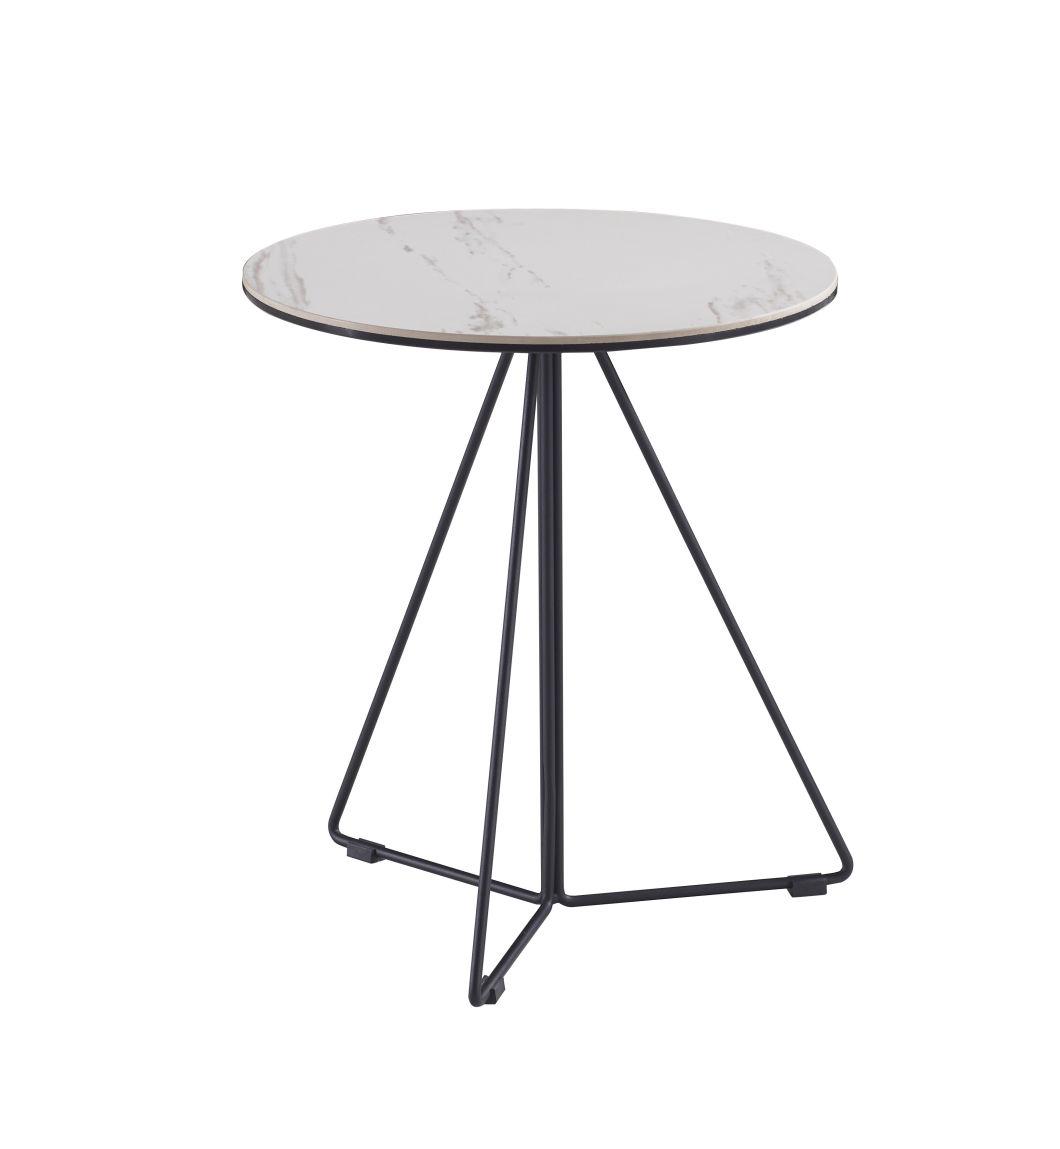 Ceramic Coffee Table /Side Table /Home Furniture /Hotel Furniture /Modern Furniture